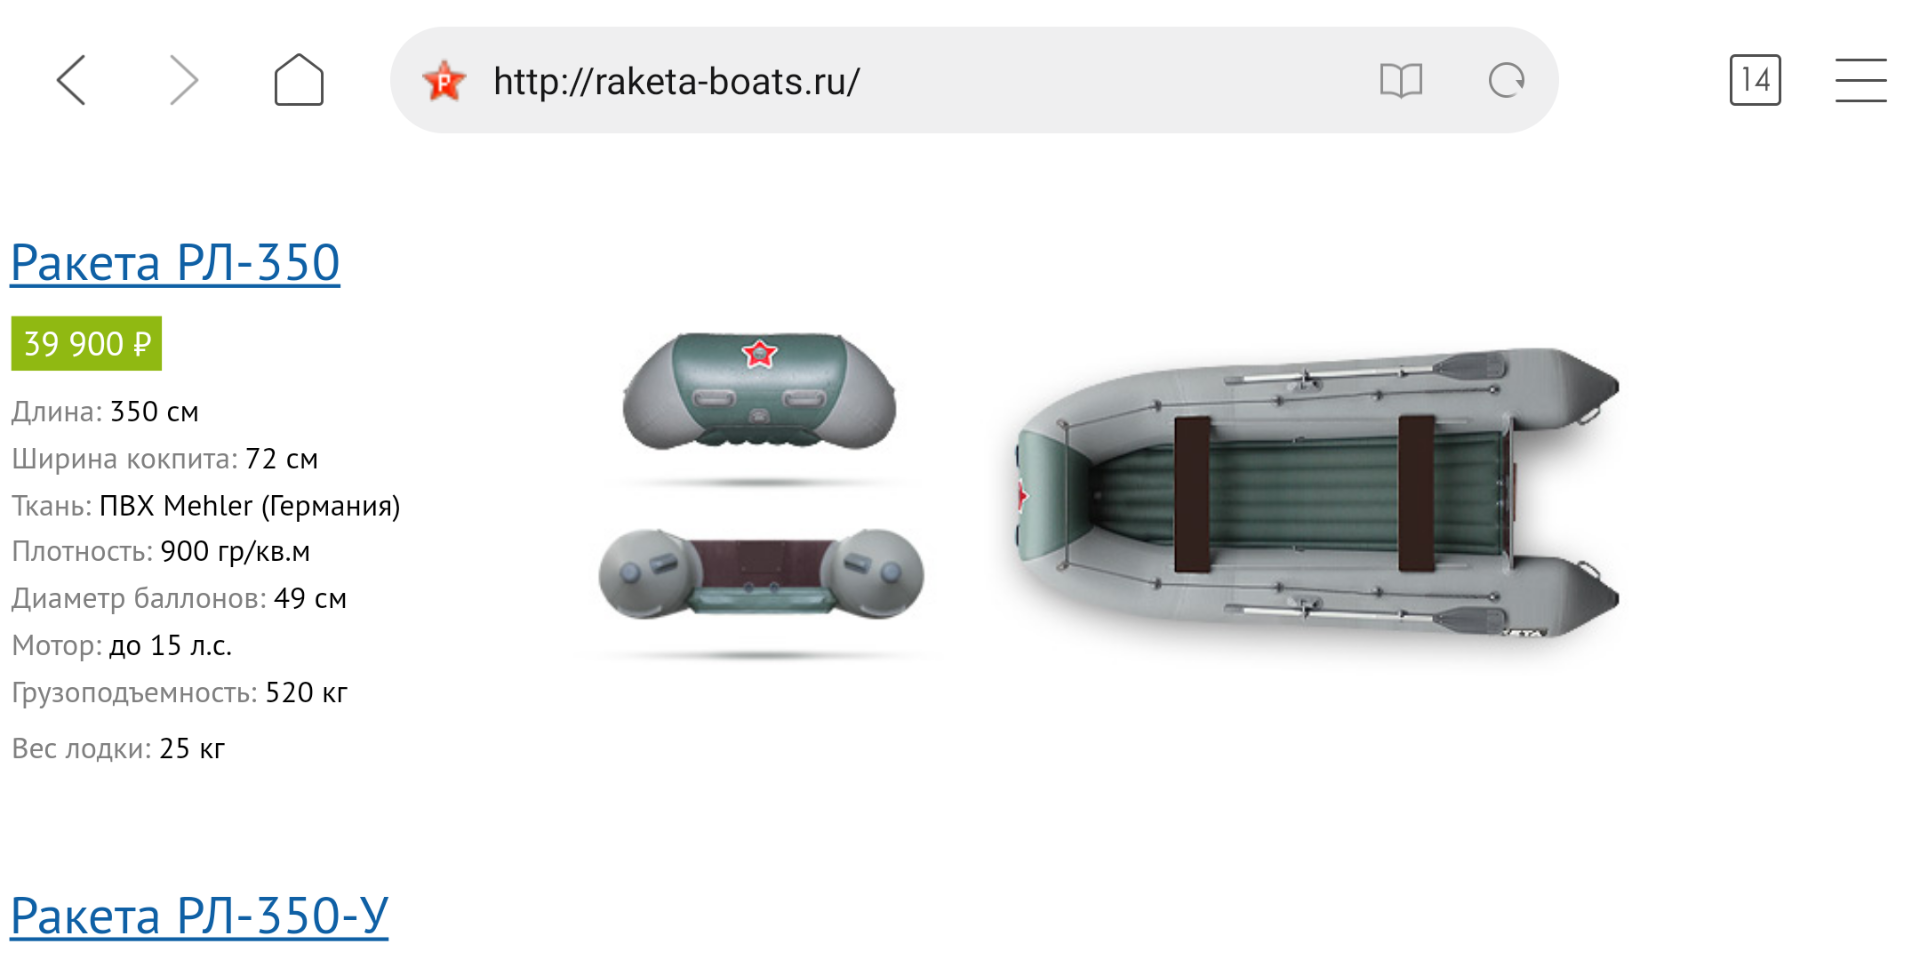 Лодки "ракета": отзывы, технические характеристики, описание